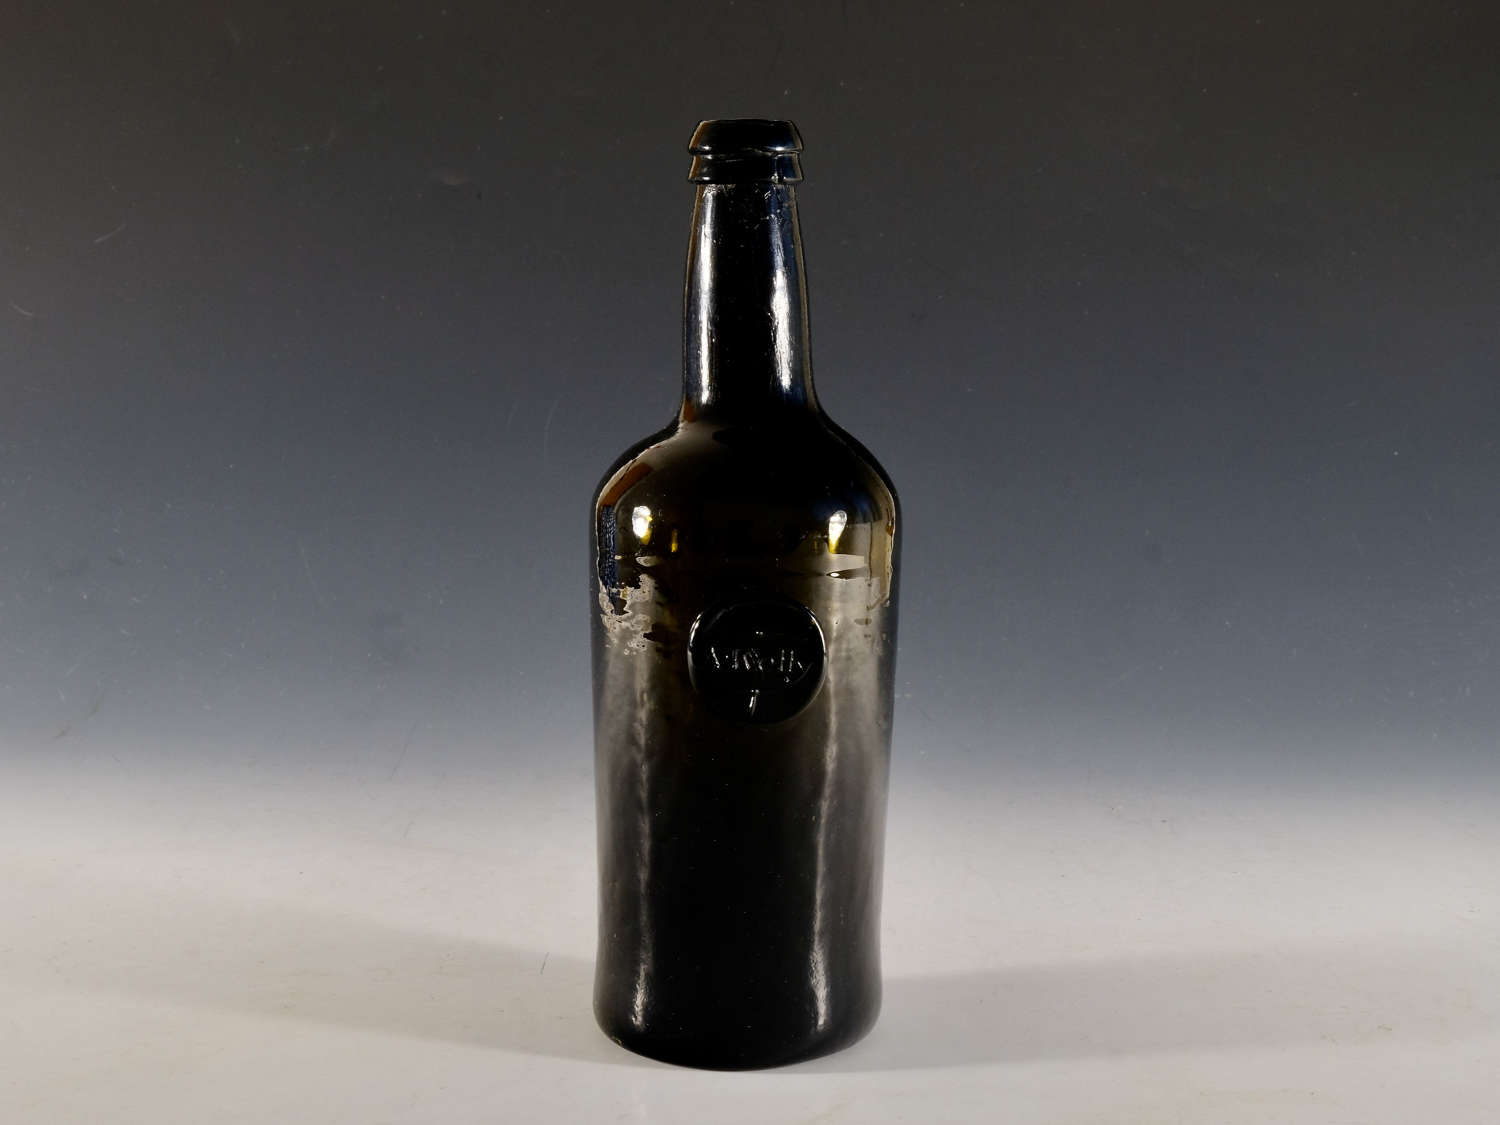 Antique glass sealed wine bottle A Kelly c1790 - 1800